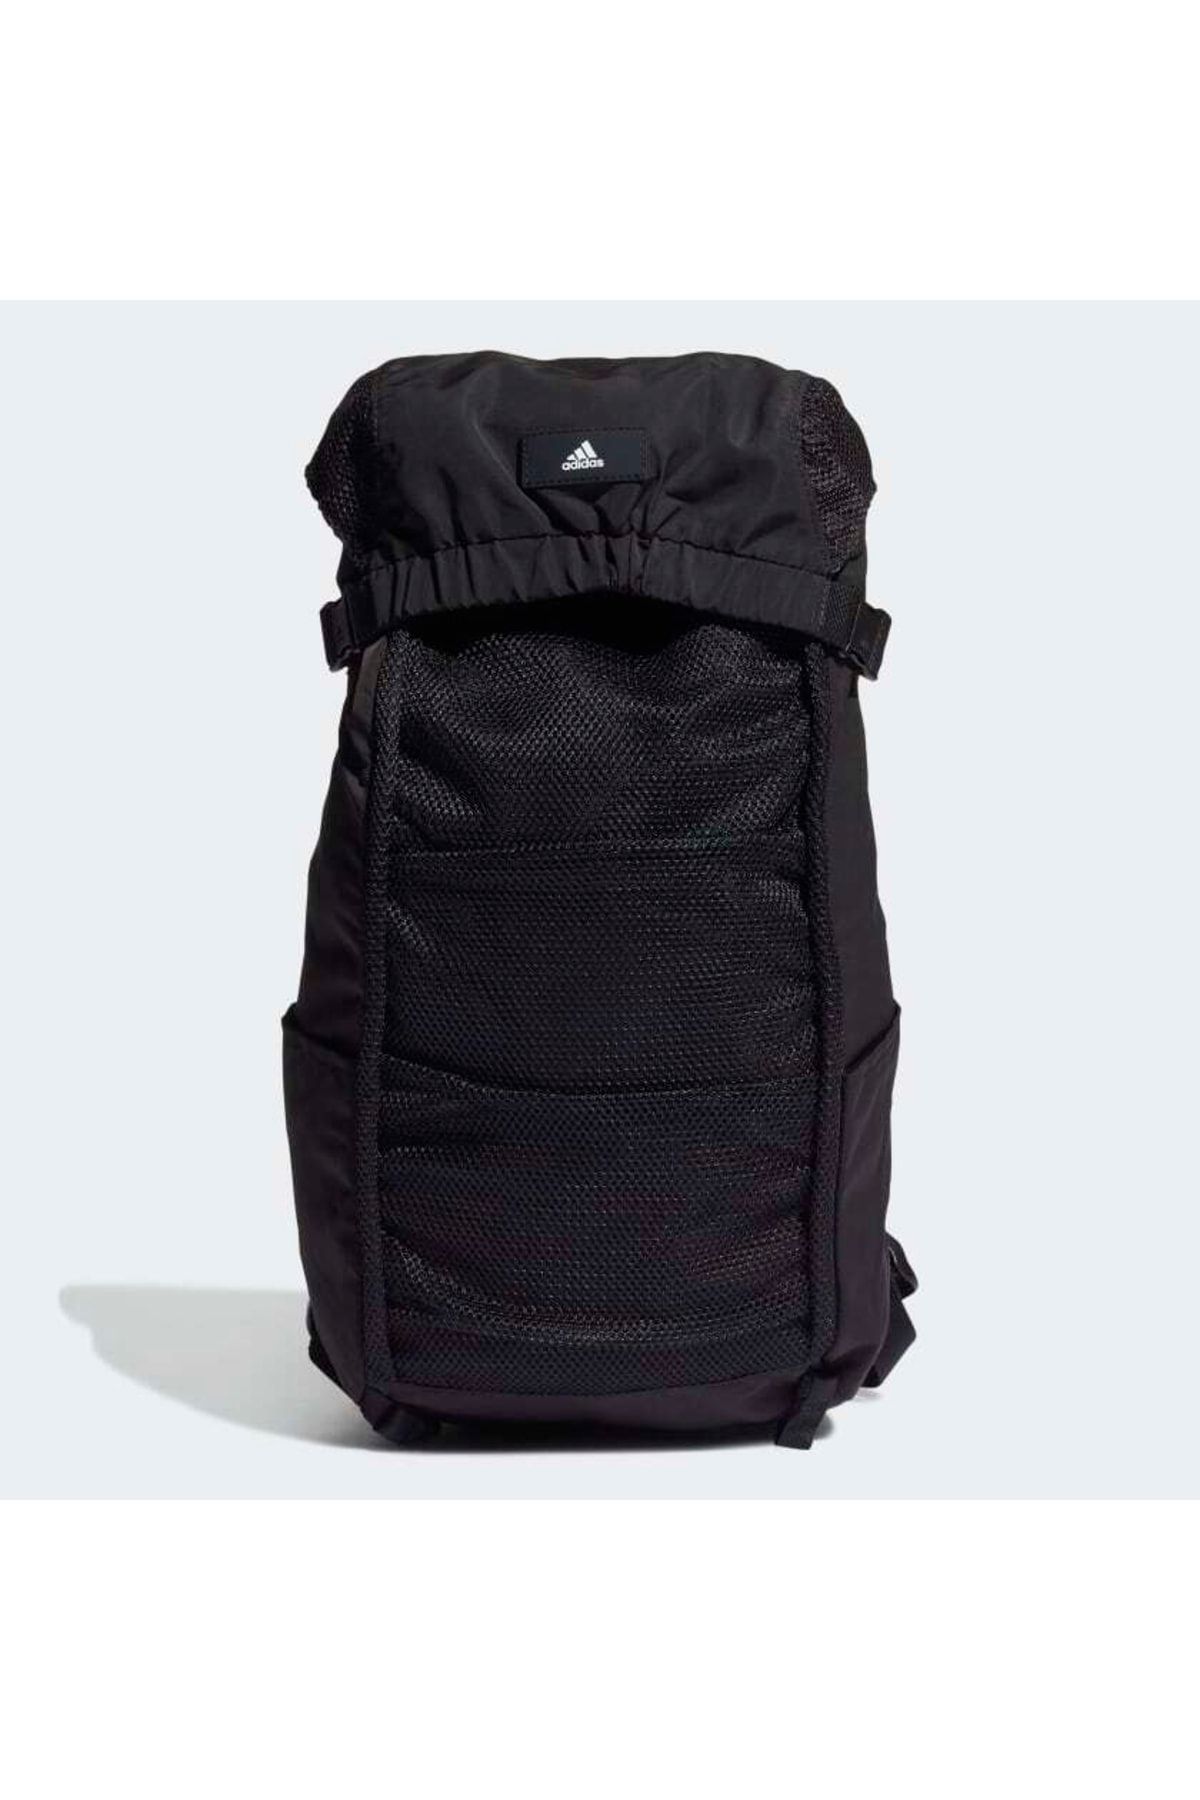 Adidas Yoga Mat Backpacks - Buy Adidas Yoga Mat Backpacks online in India